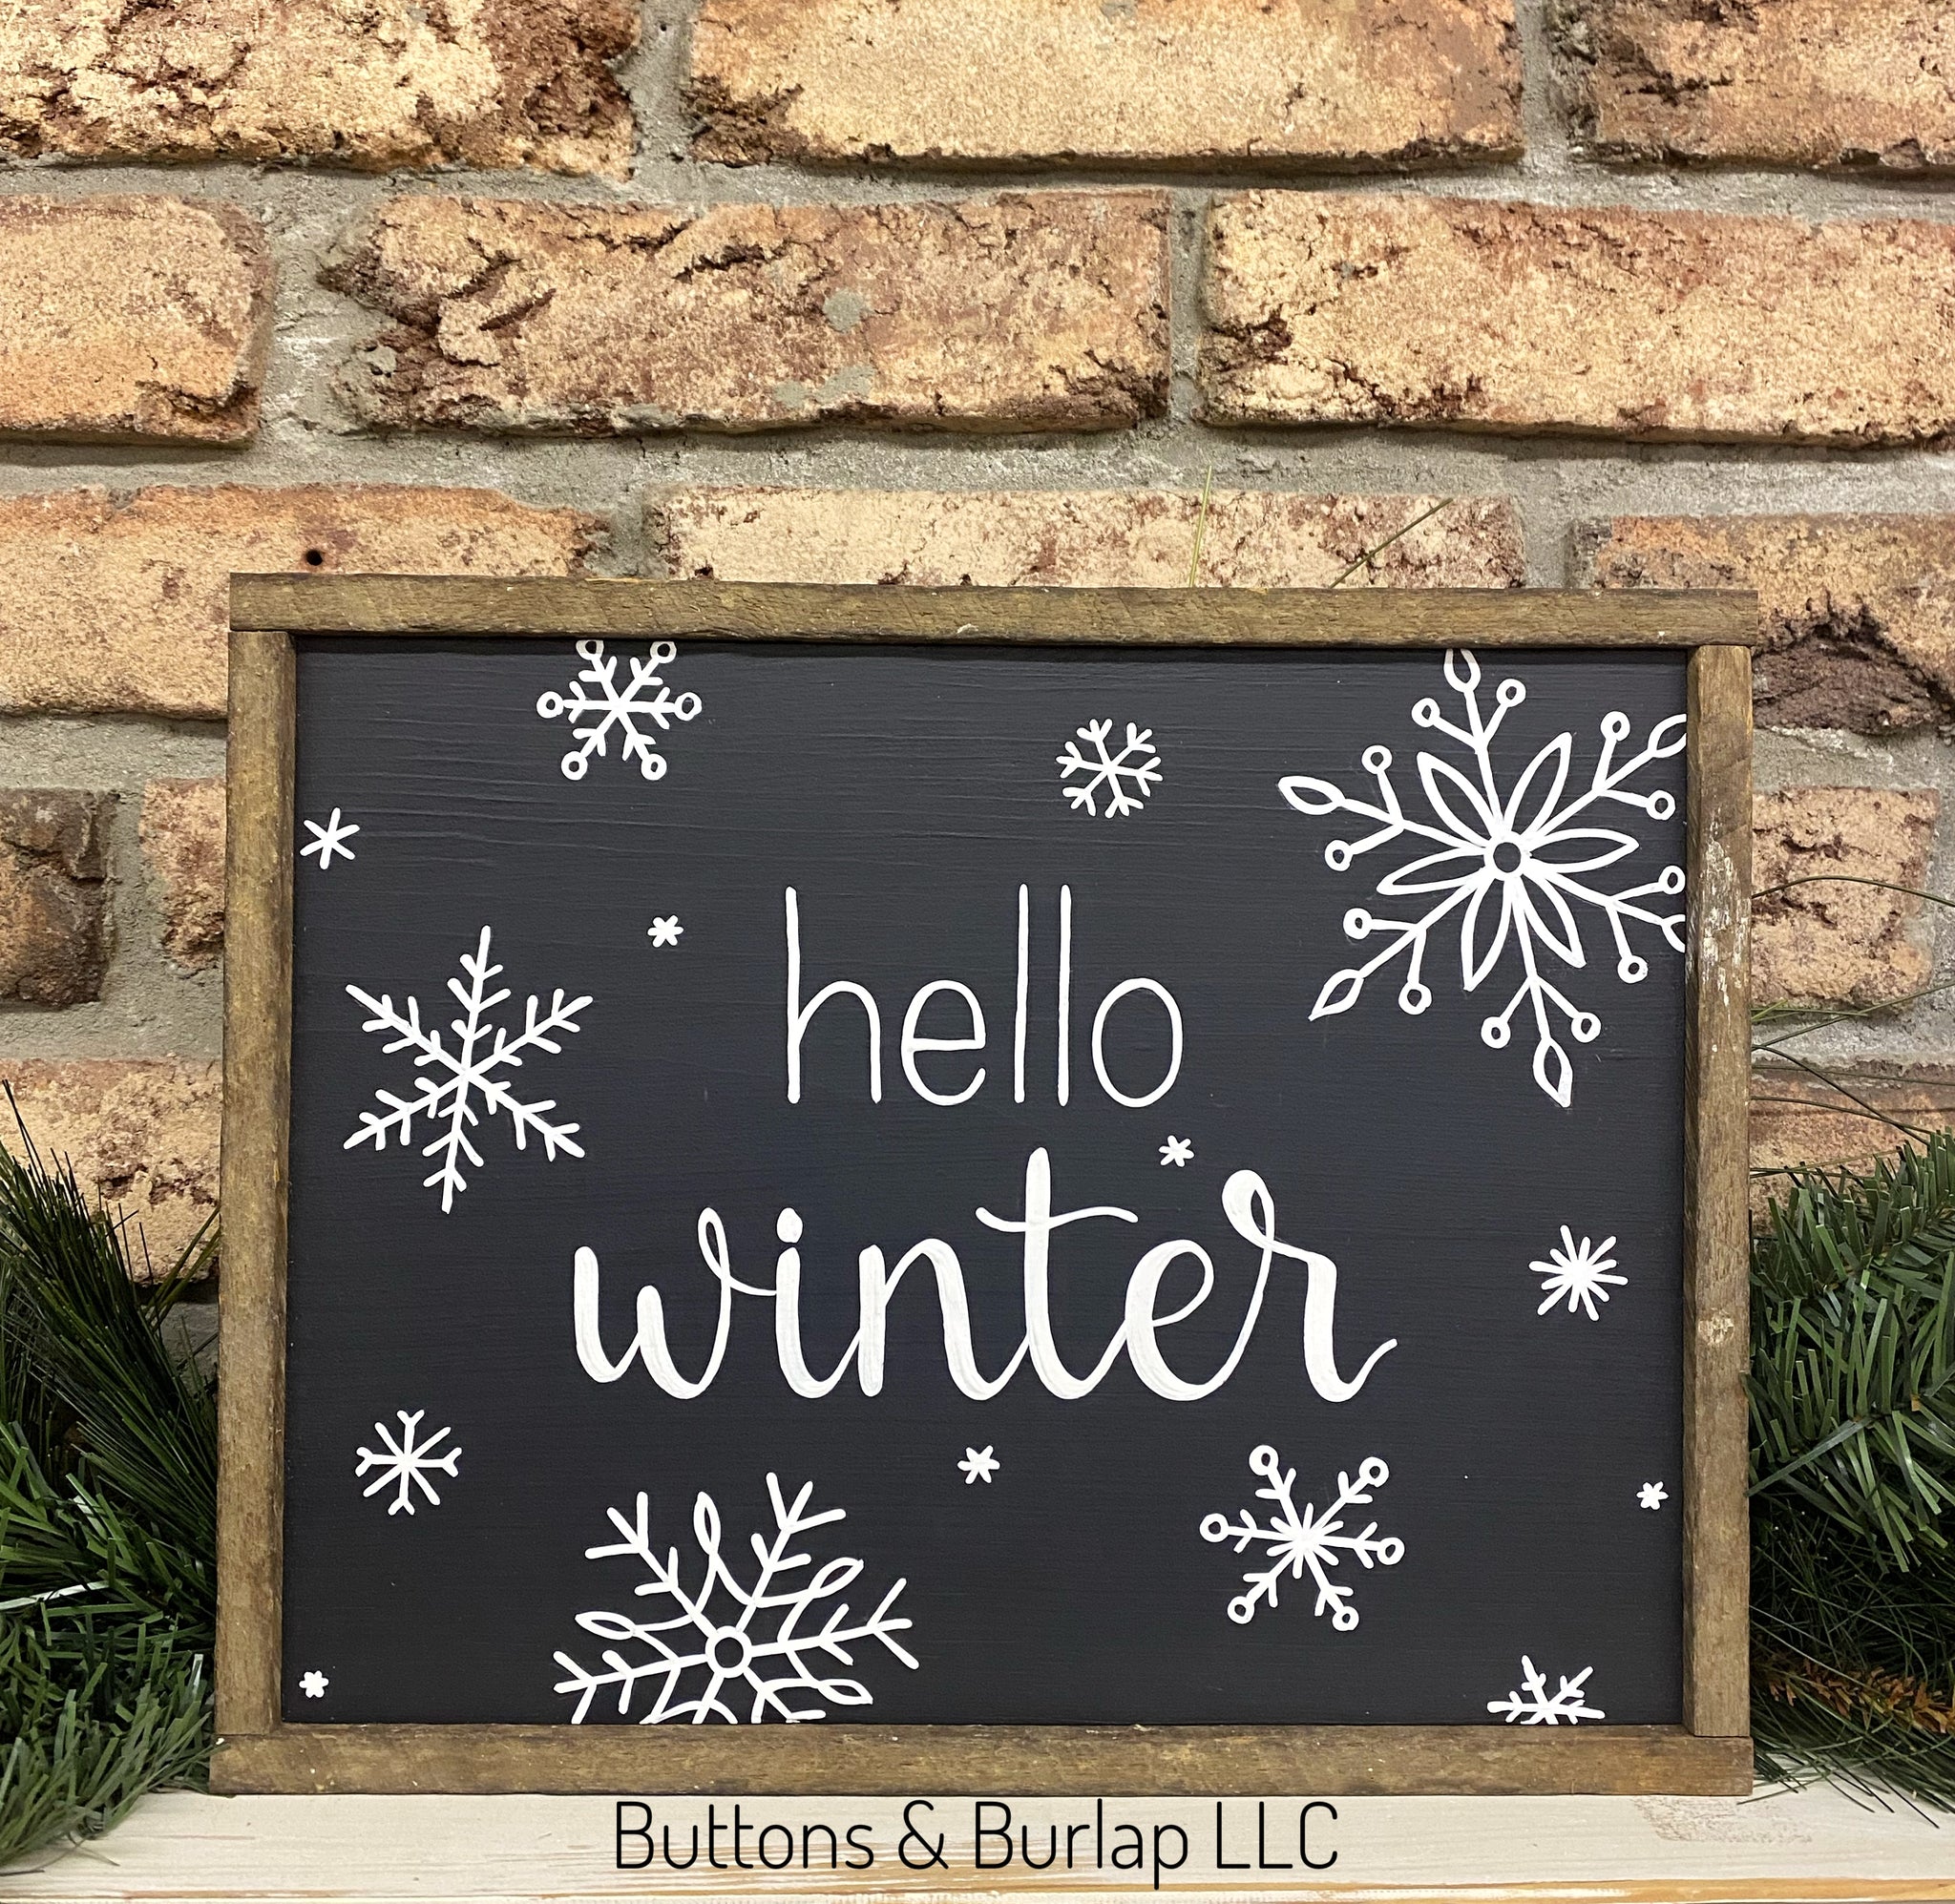 Hello winter snowflake sign